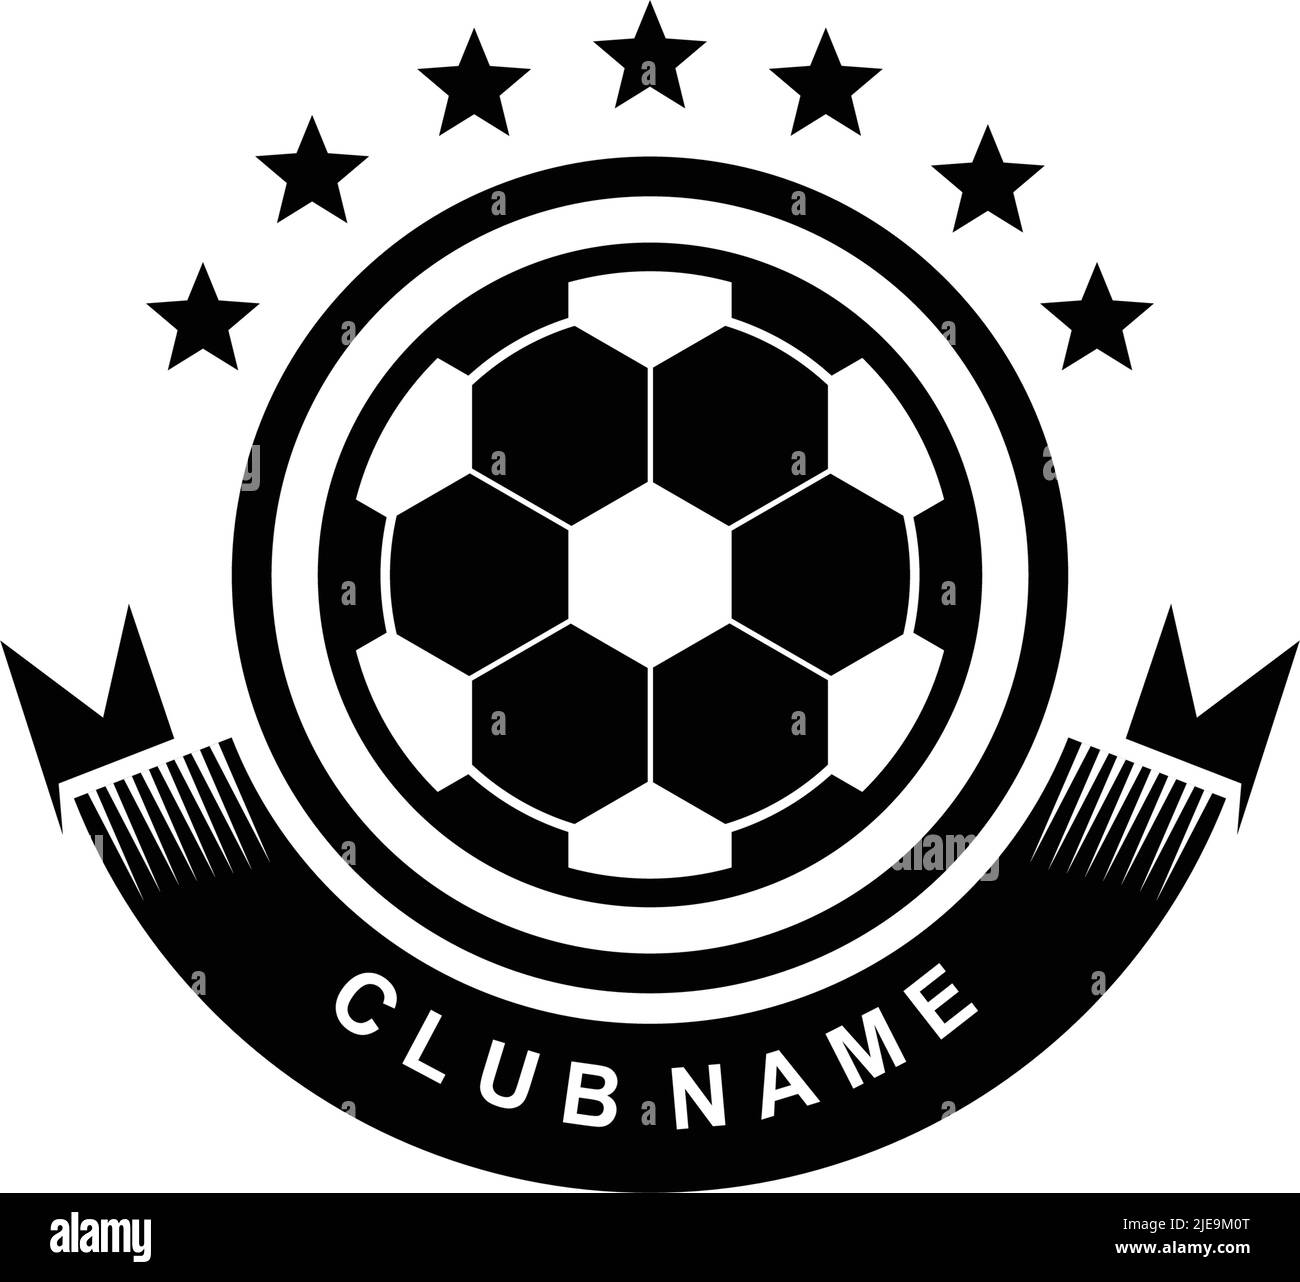 Football emblem logo design inspiration vector template Stock Vector